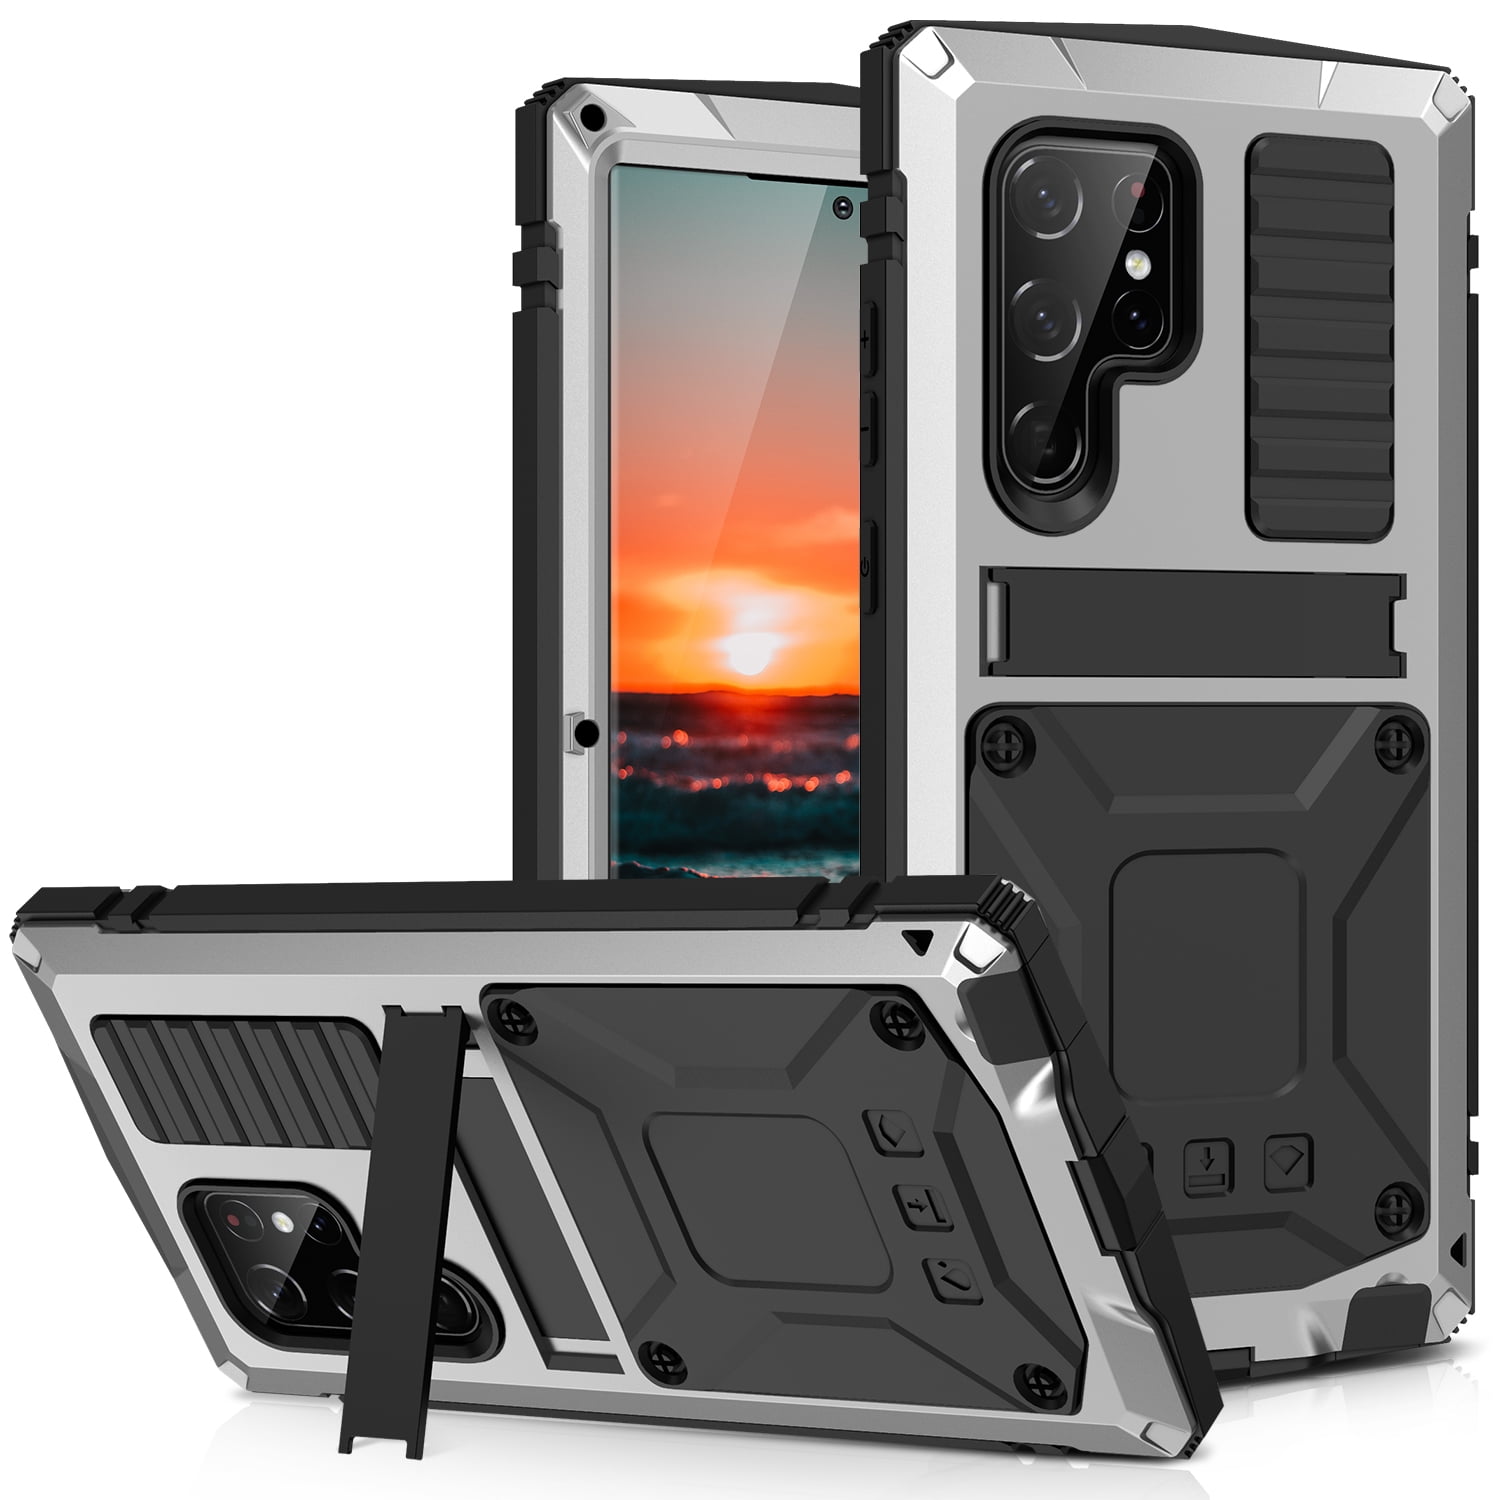 Casebus Samsung Galaxy S22 Ultra Metal Case - Heavy Duty - Shockproof Dustproof - with Screen Protector - Doom Tough Armor - Bumper Frame - Black